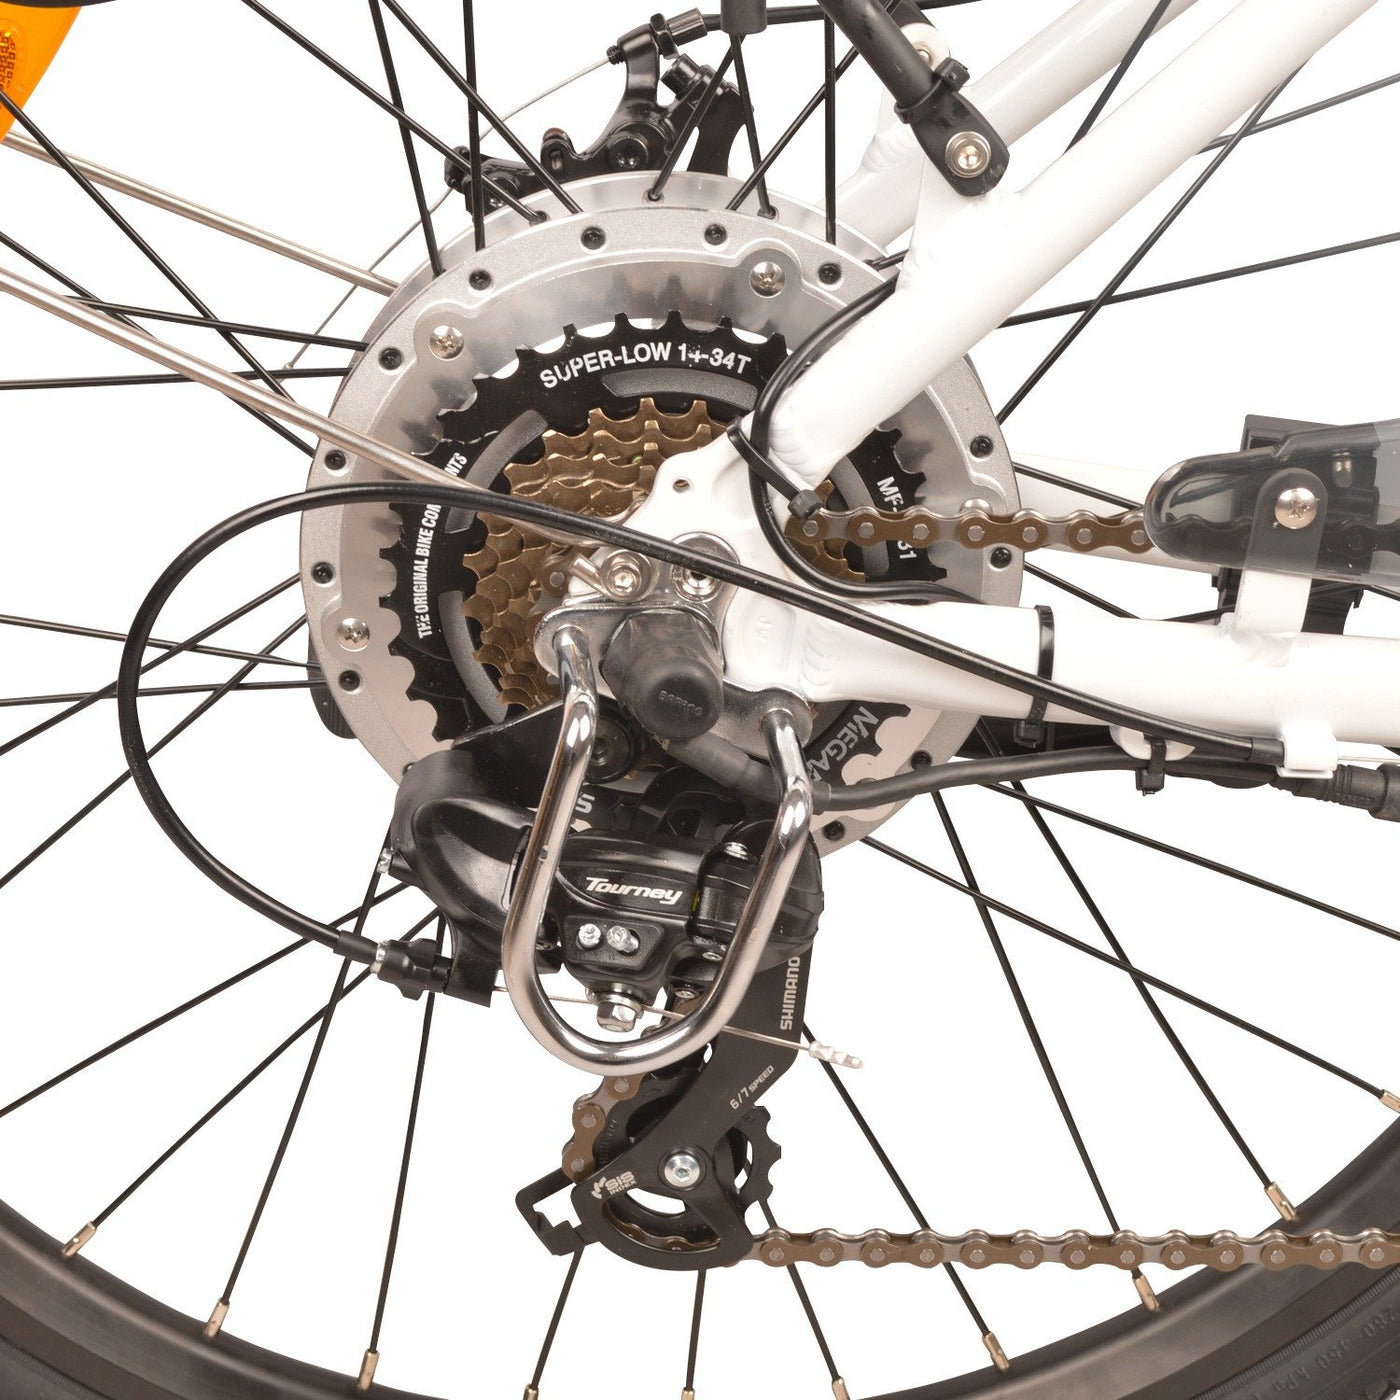 Electric commuter bike quality Shimano derailleur and gear shifting system, DJ City Bike